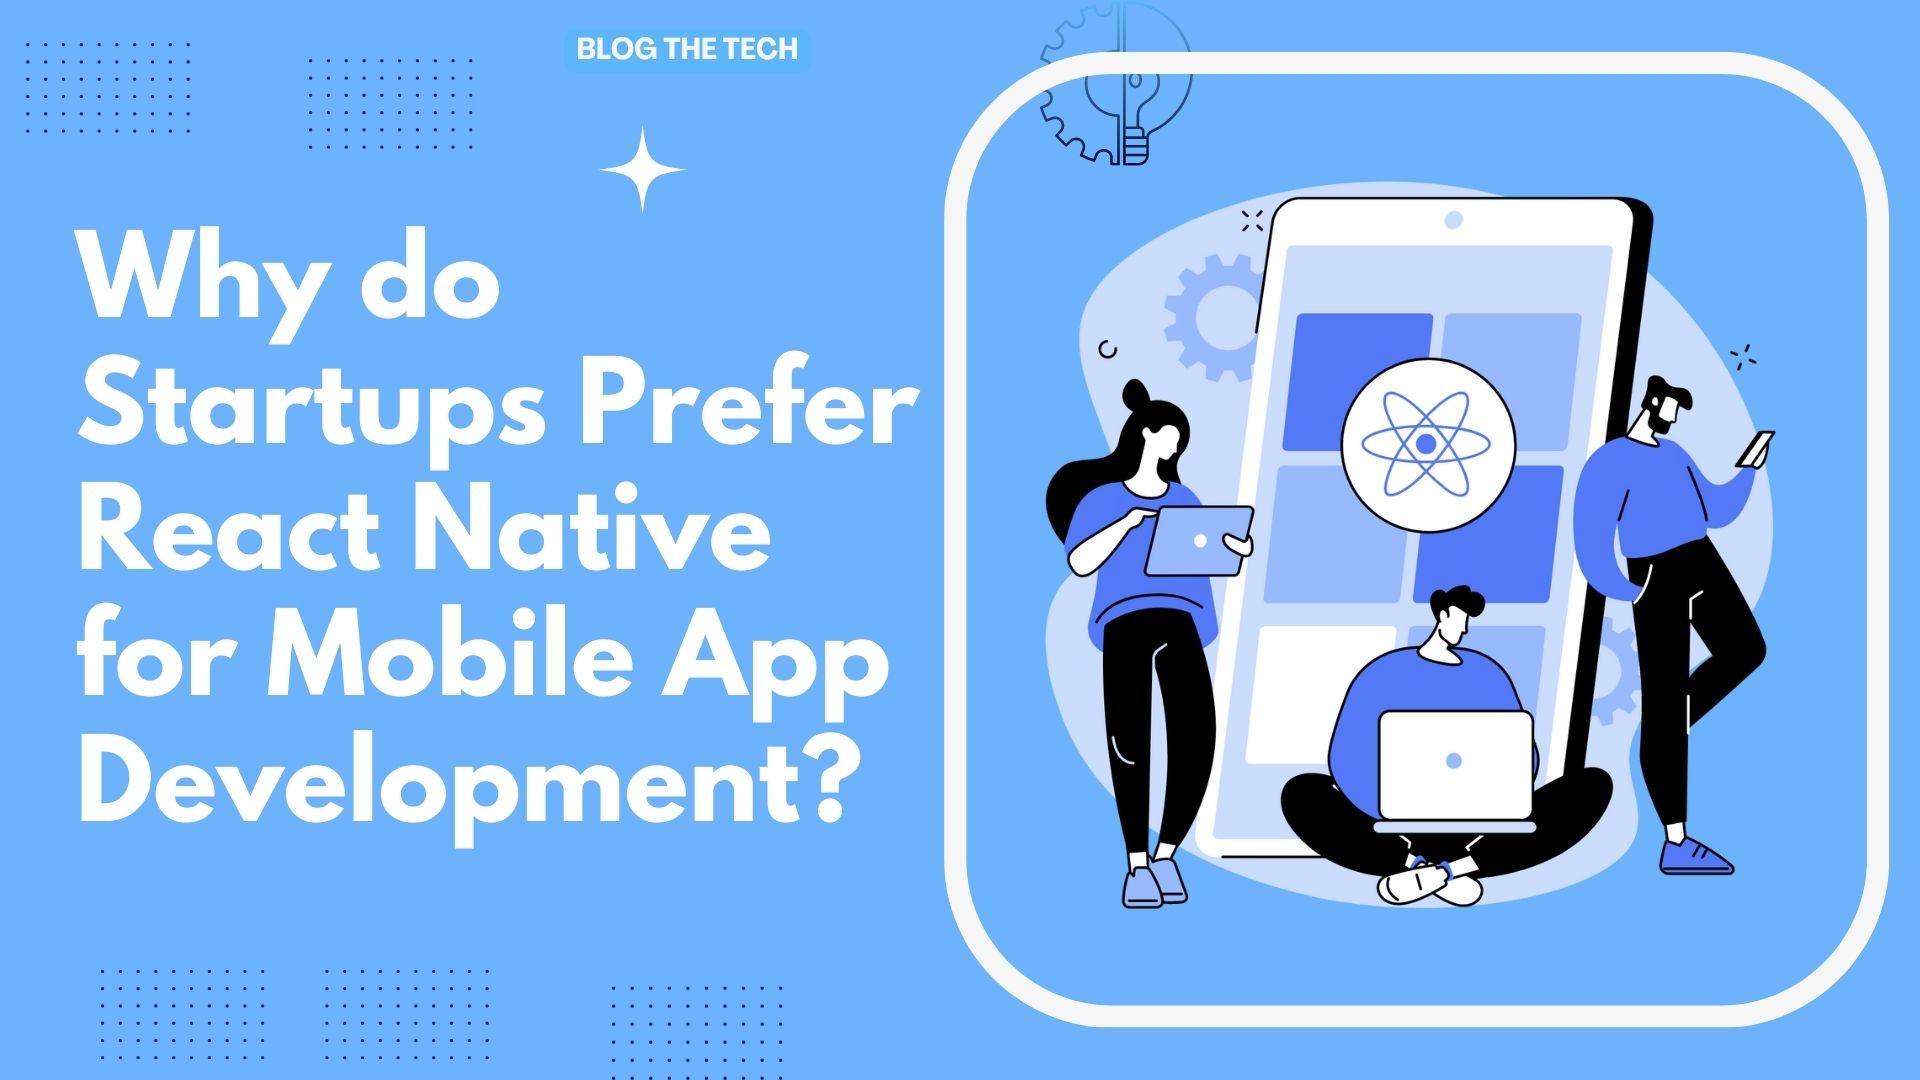 Why do Startups Prefer React Native for Mobile App Development?